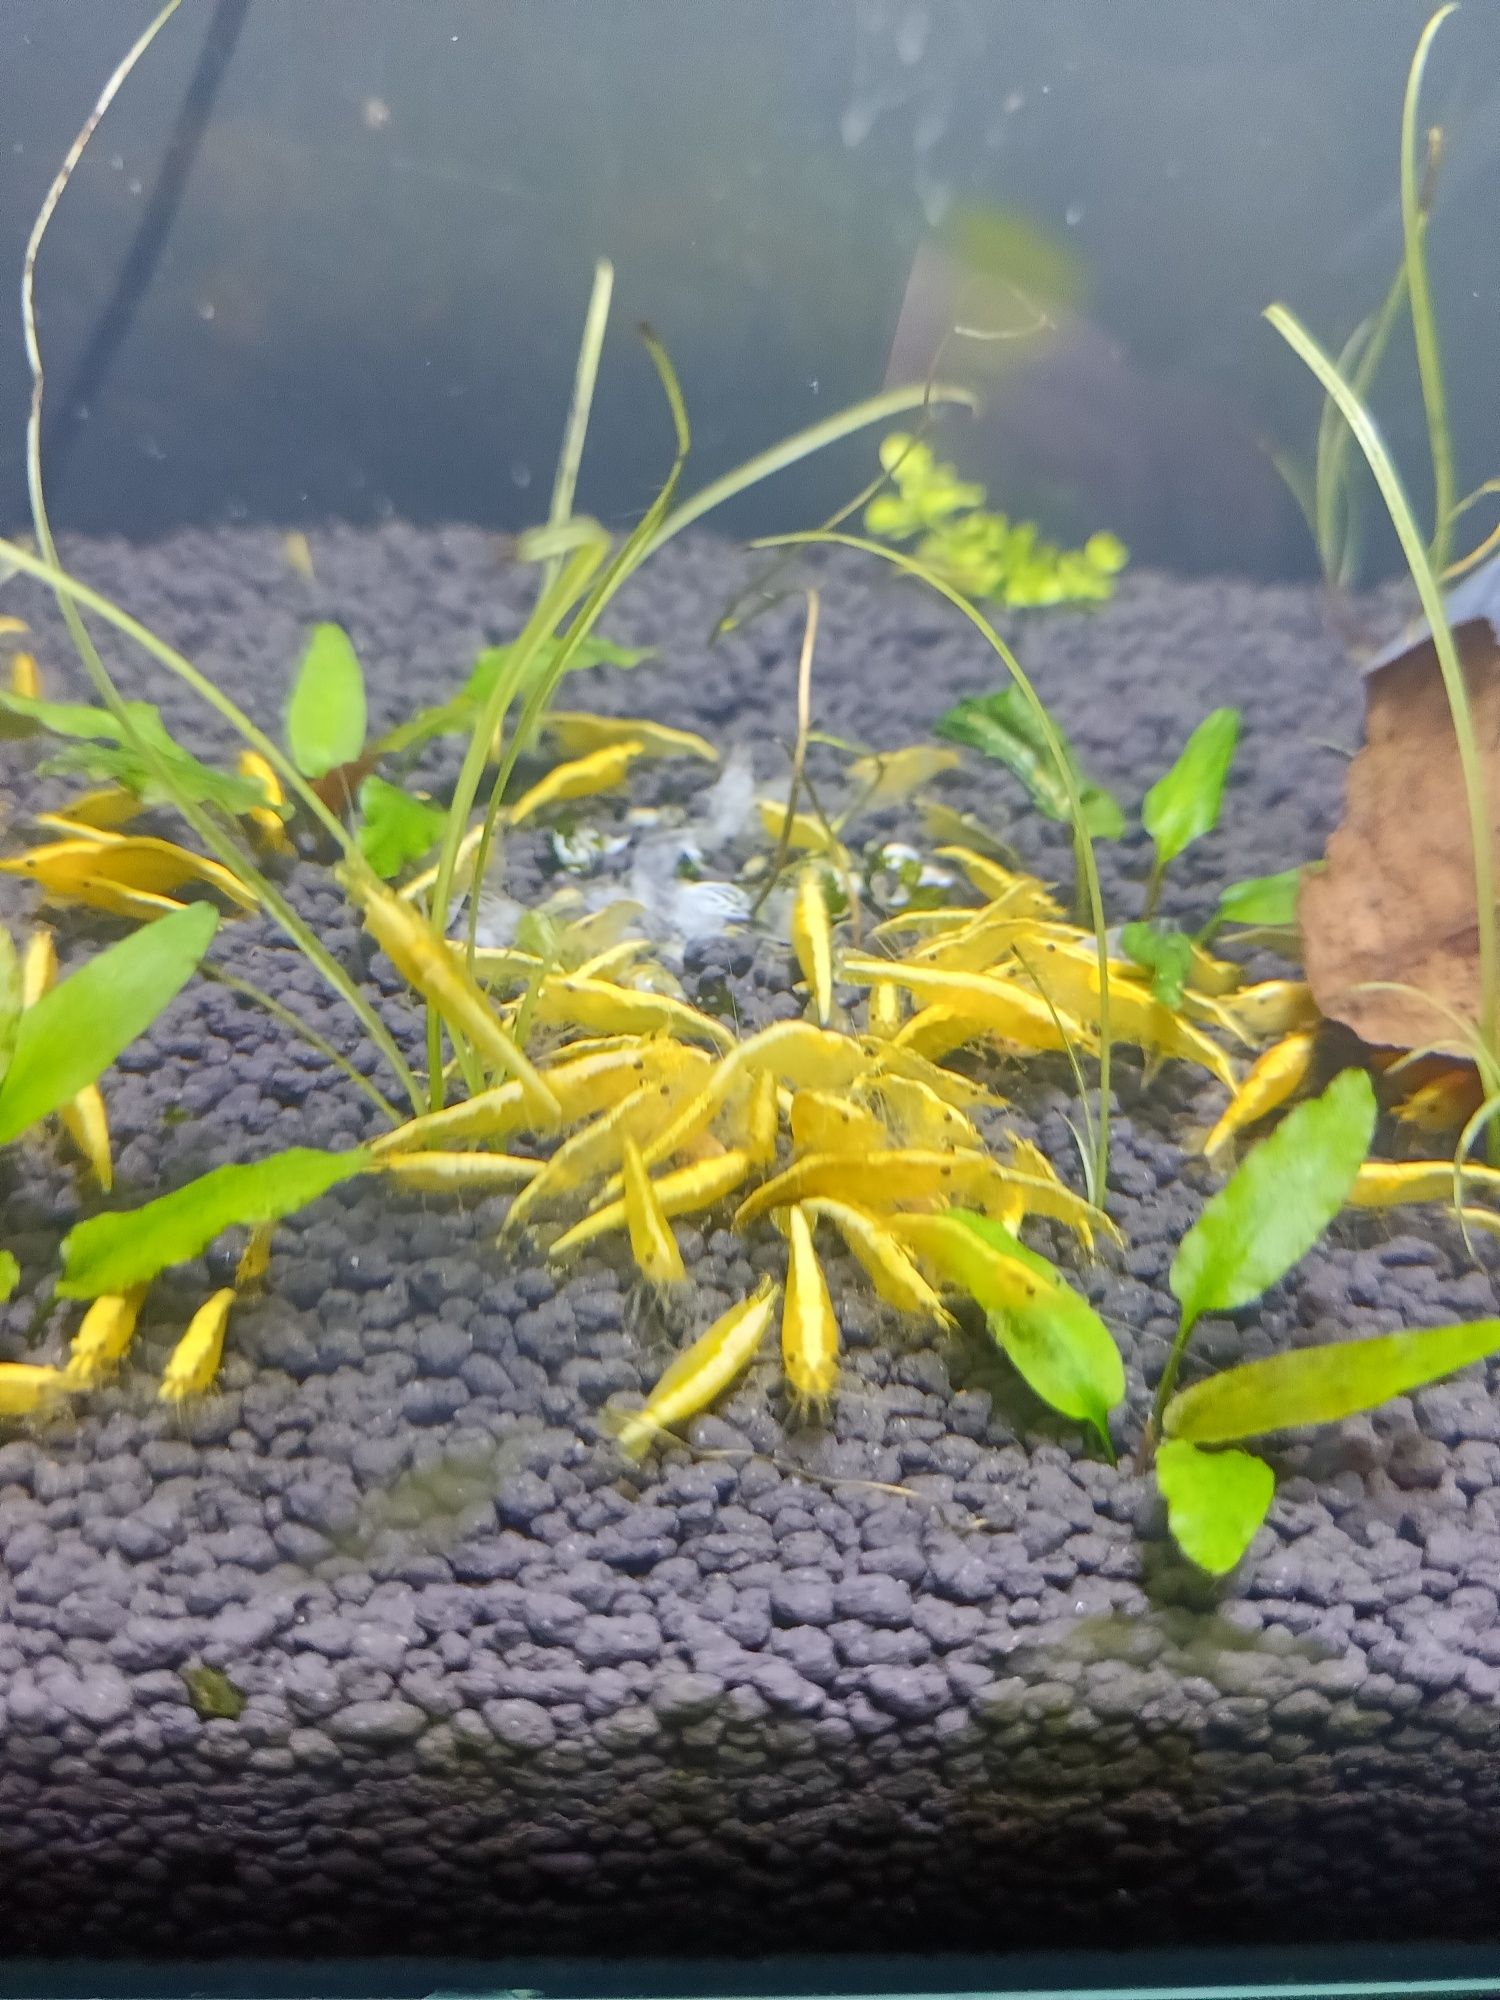 Krewetki yellow dorosłe